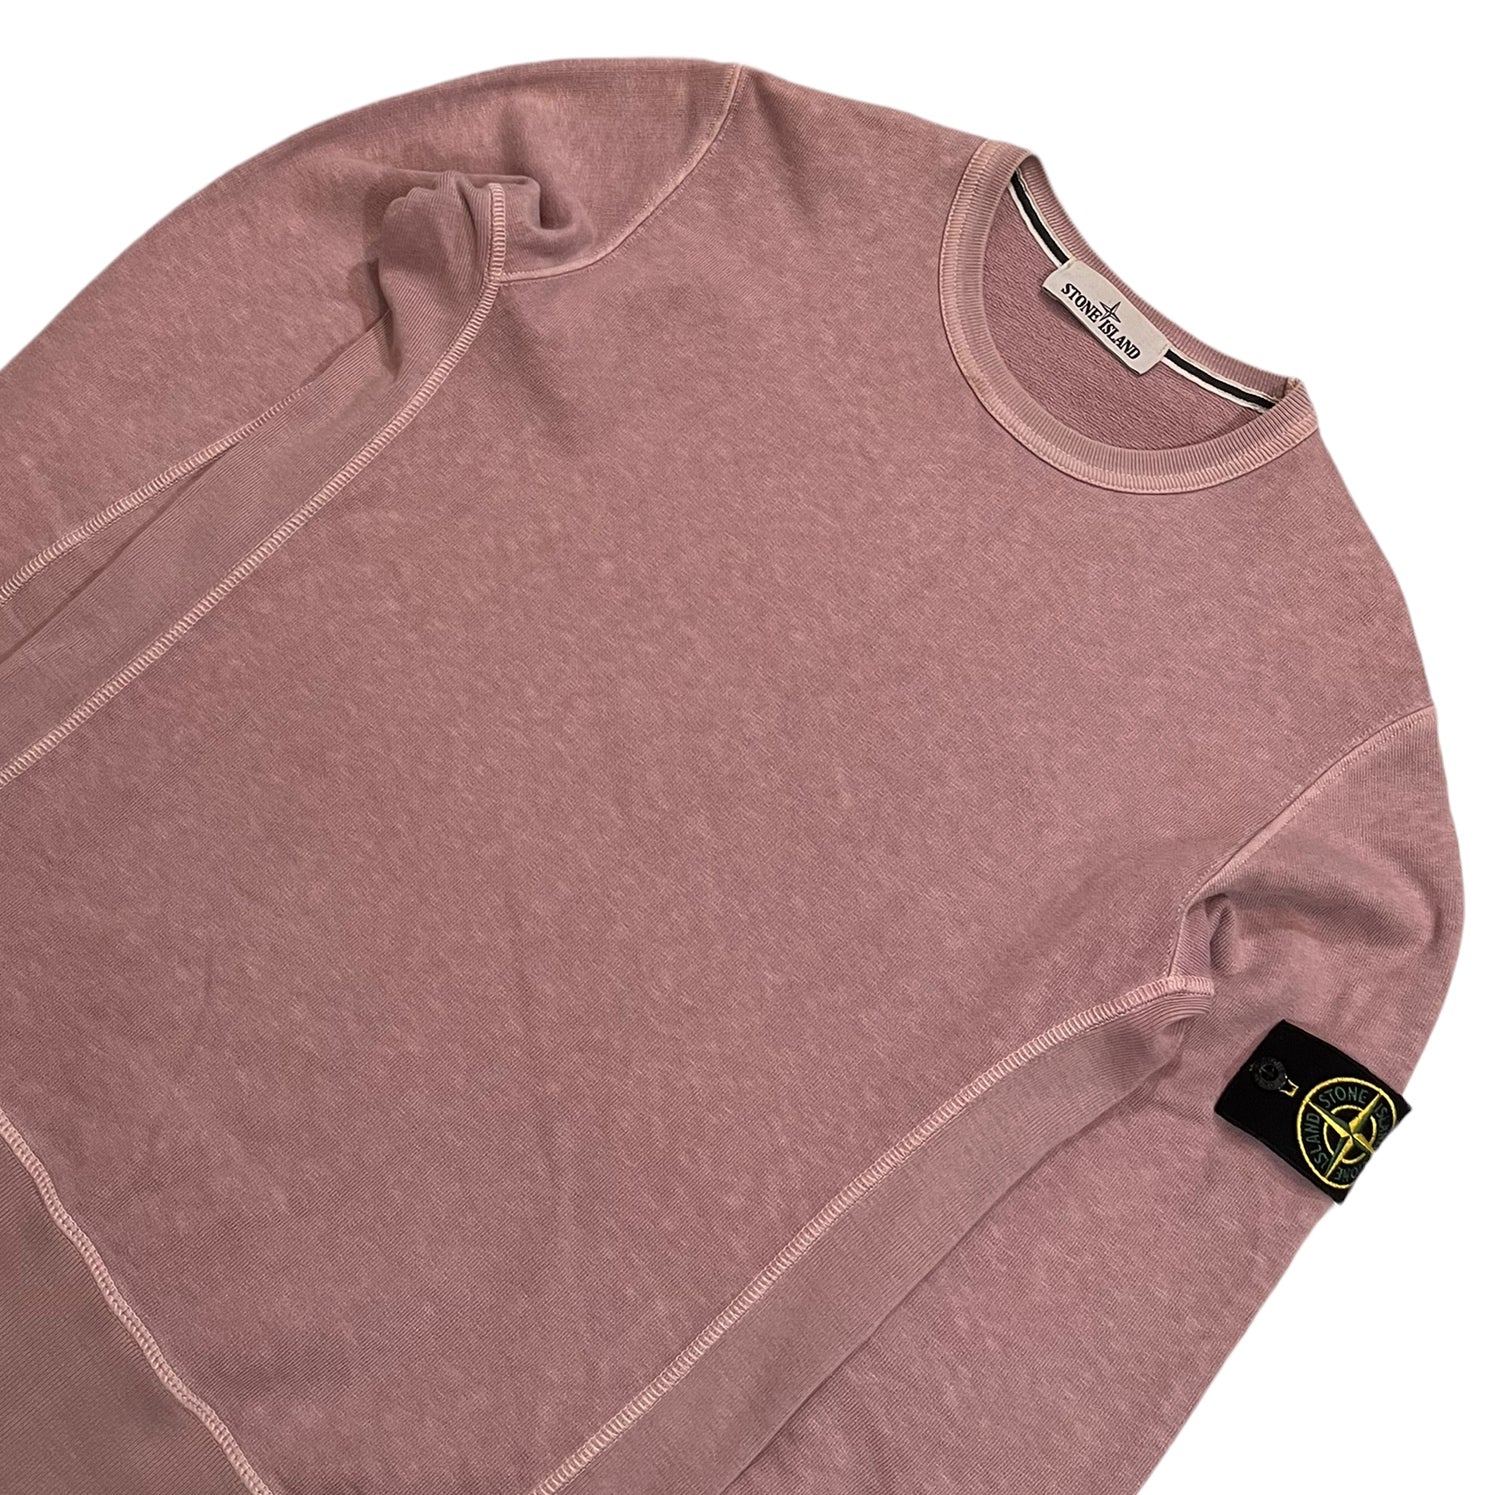 Stone Island Pullover Jumper Sweatshirt